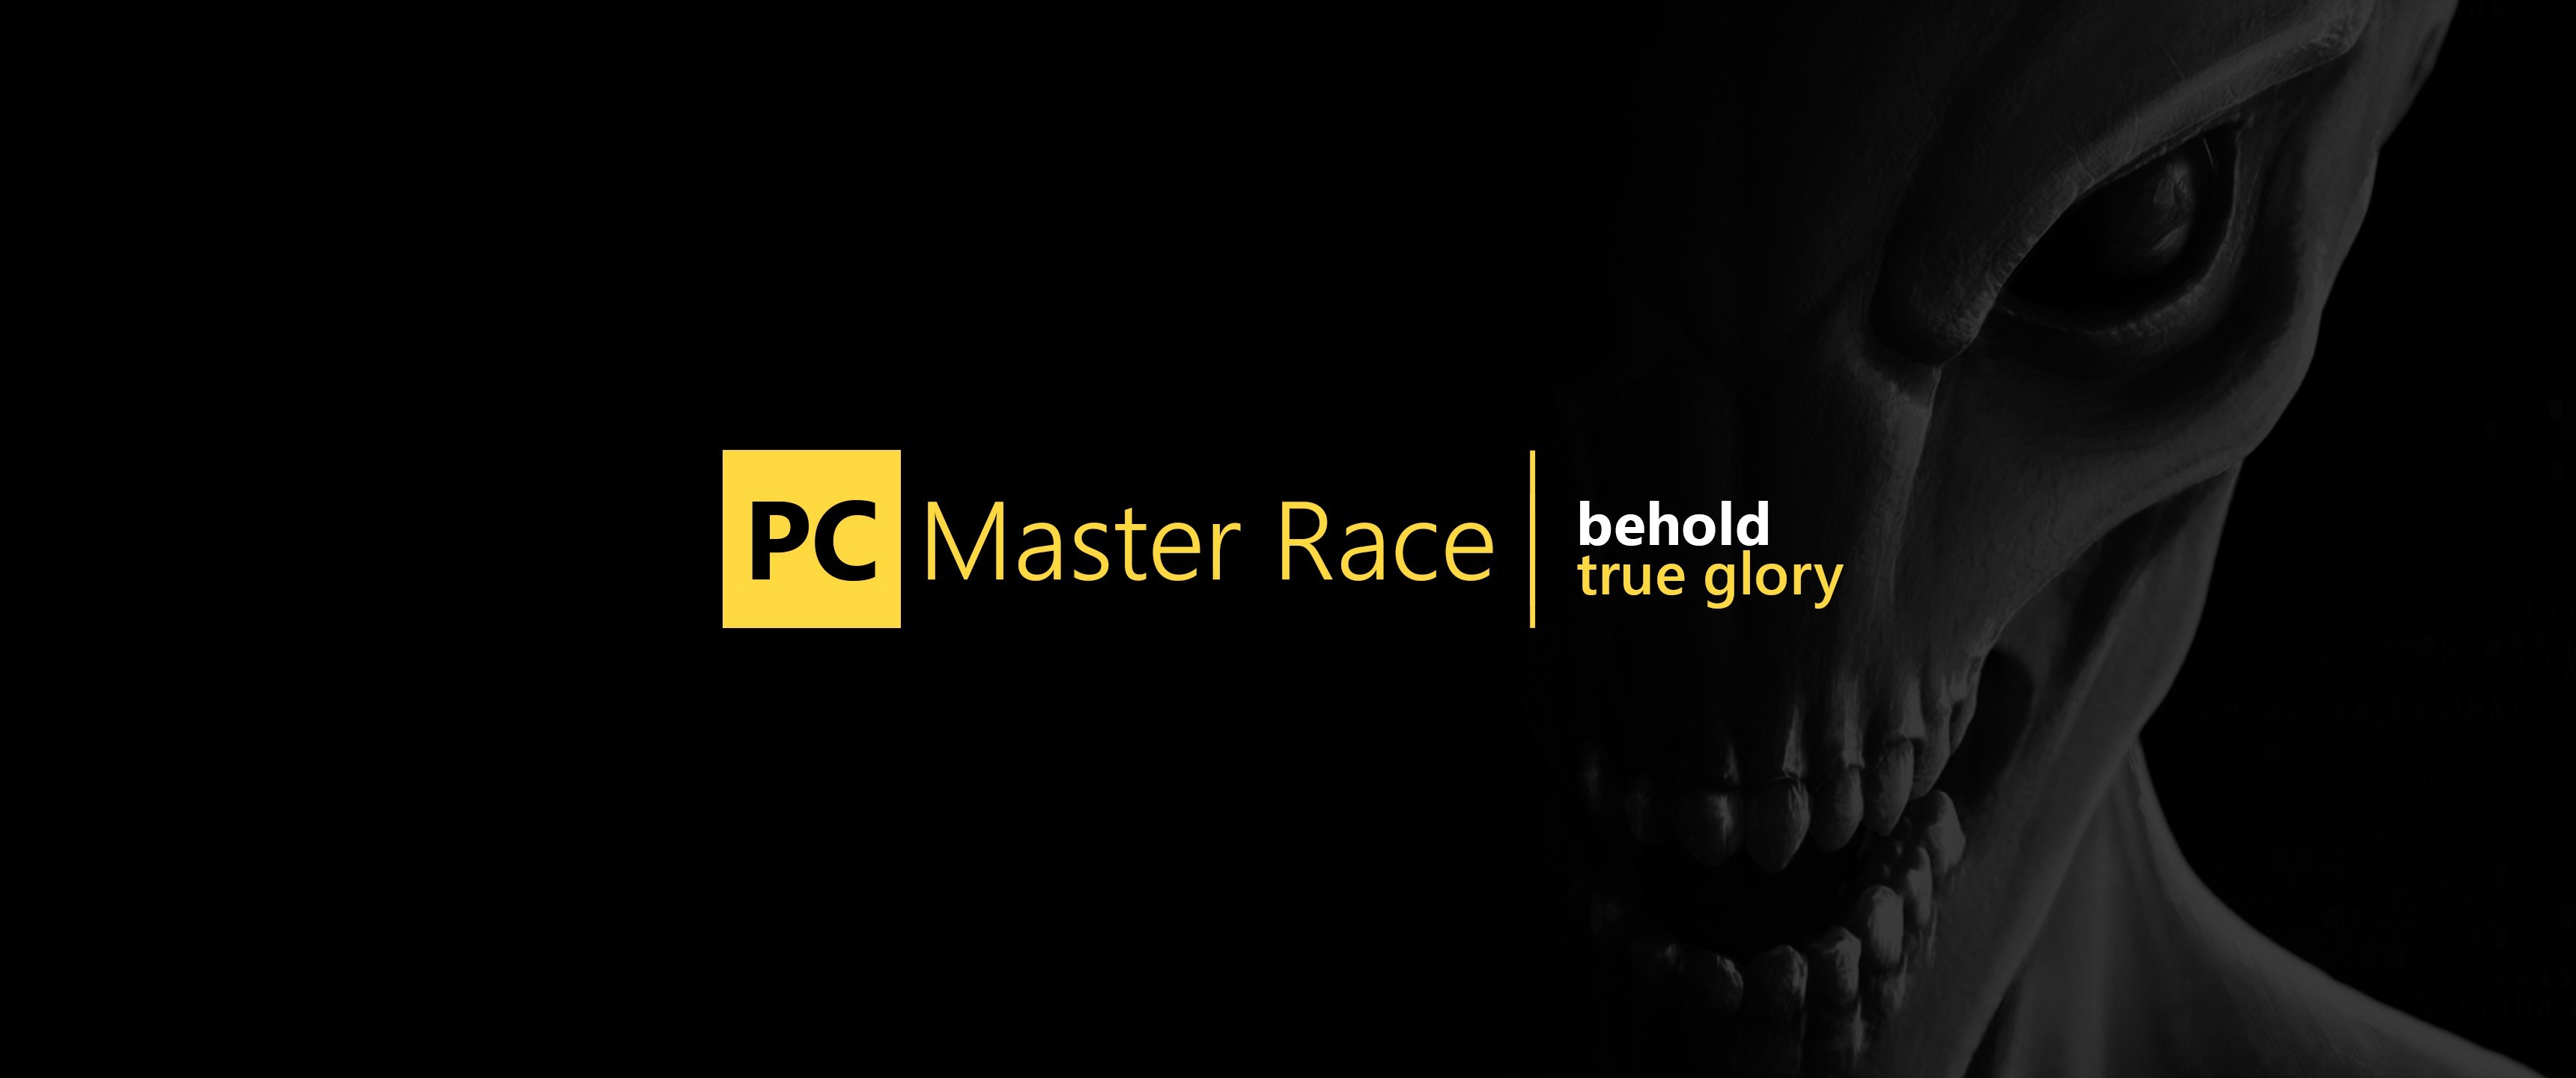 General 3440x1440 PC gaming PC Master  Race black background digital art